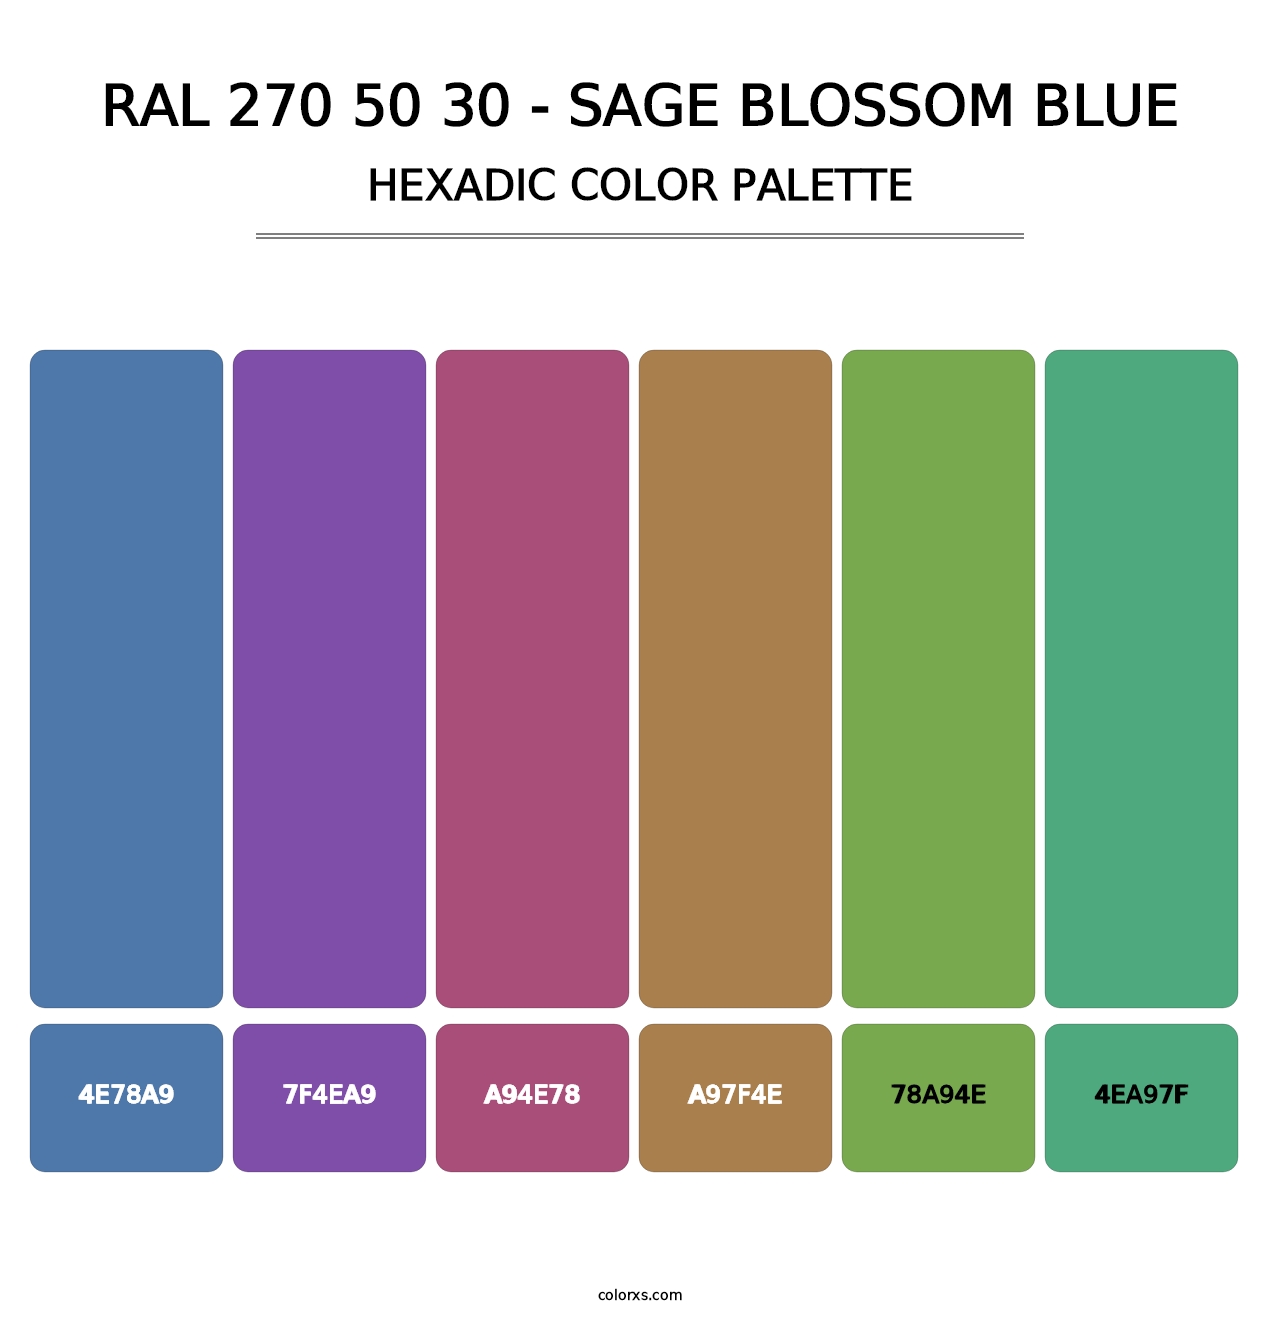 RAL 270 50 30 - Sage Blossom Blue - Hexadic Color Palette